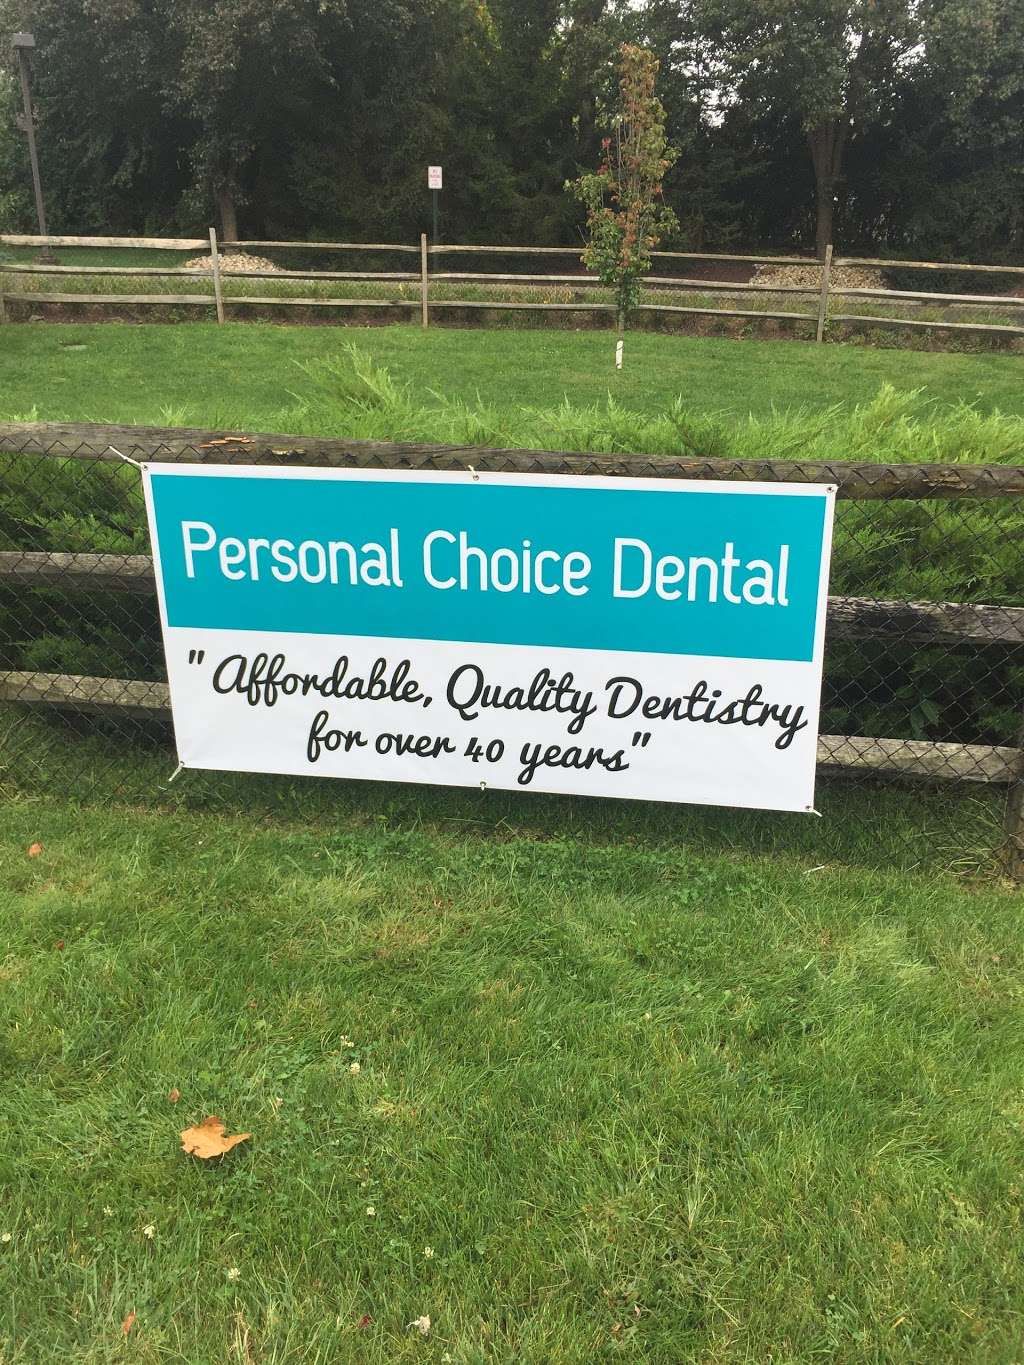 Personal Choice Dental, Parlin | 811 Washington Rd A, Parlin, NJ 08859 | Phone: (732) 238-7272